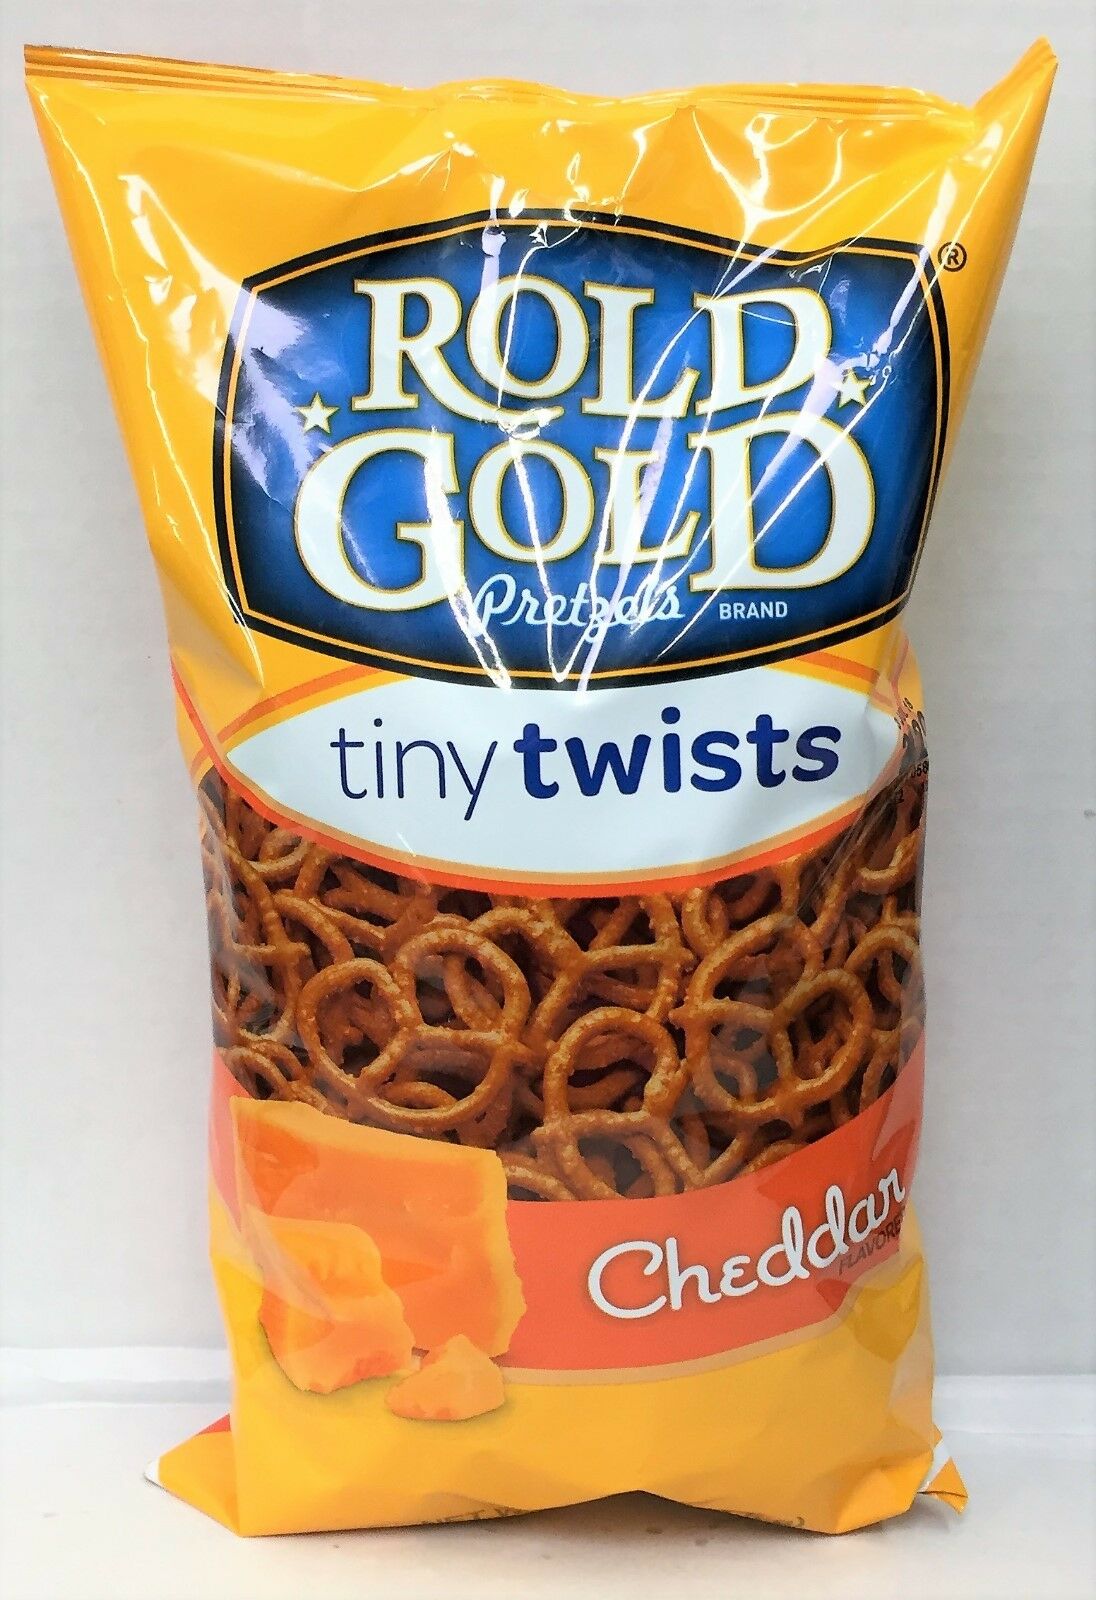 Rold Gold Cheddar Cheese Tiny Twists Pretzels 10 oz